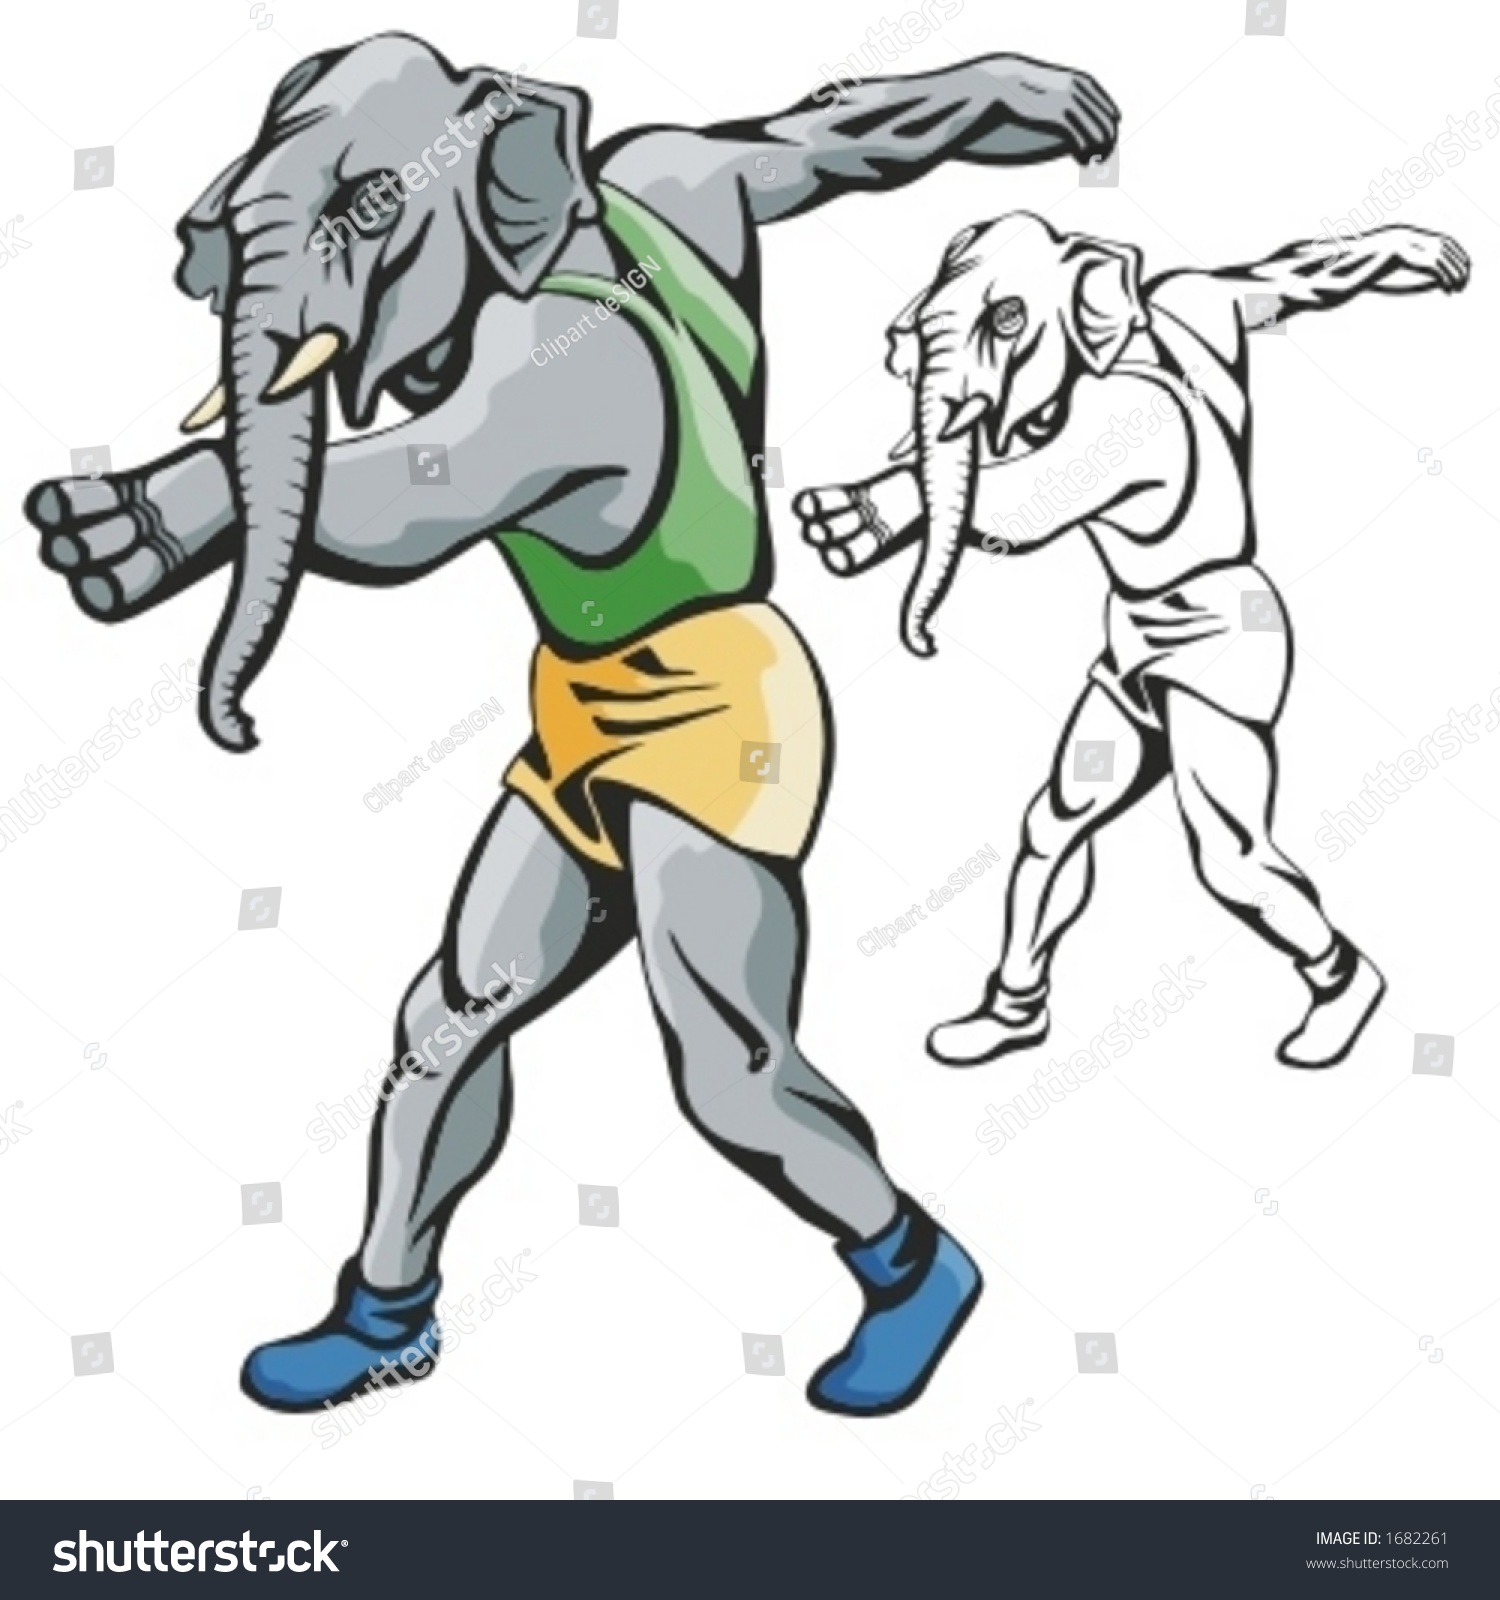 elephant mascot clipart - photo #25